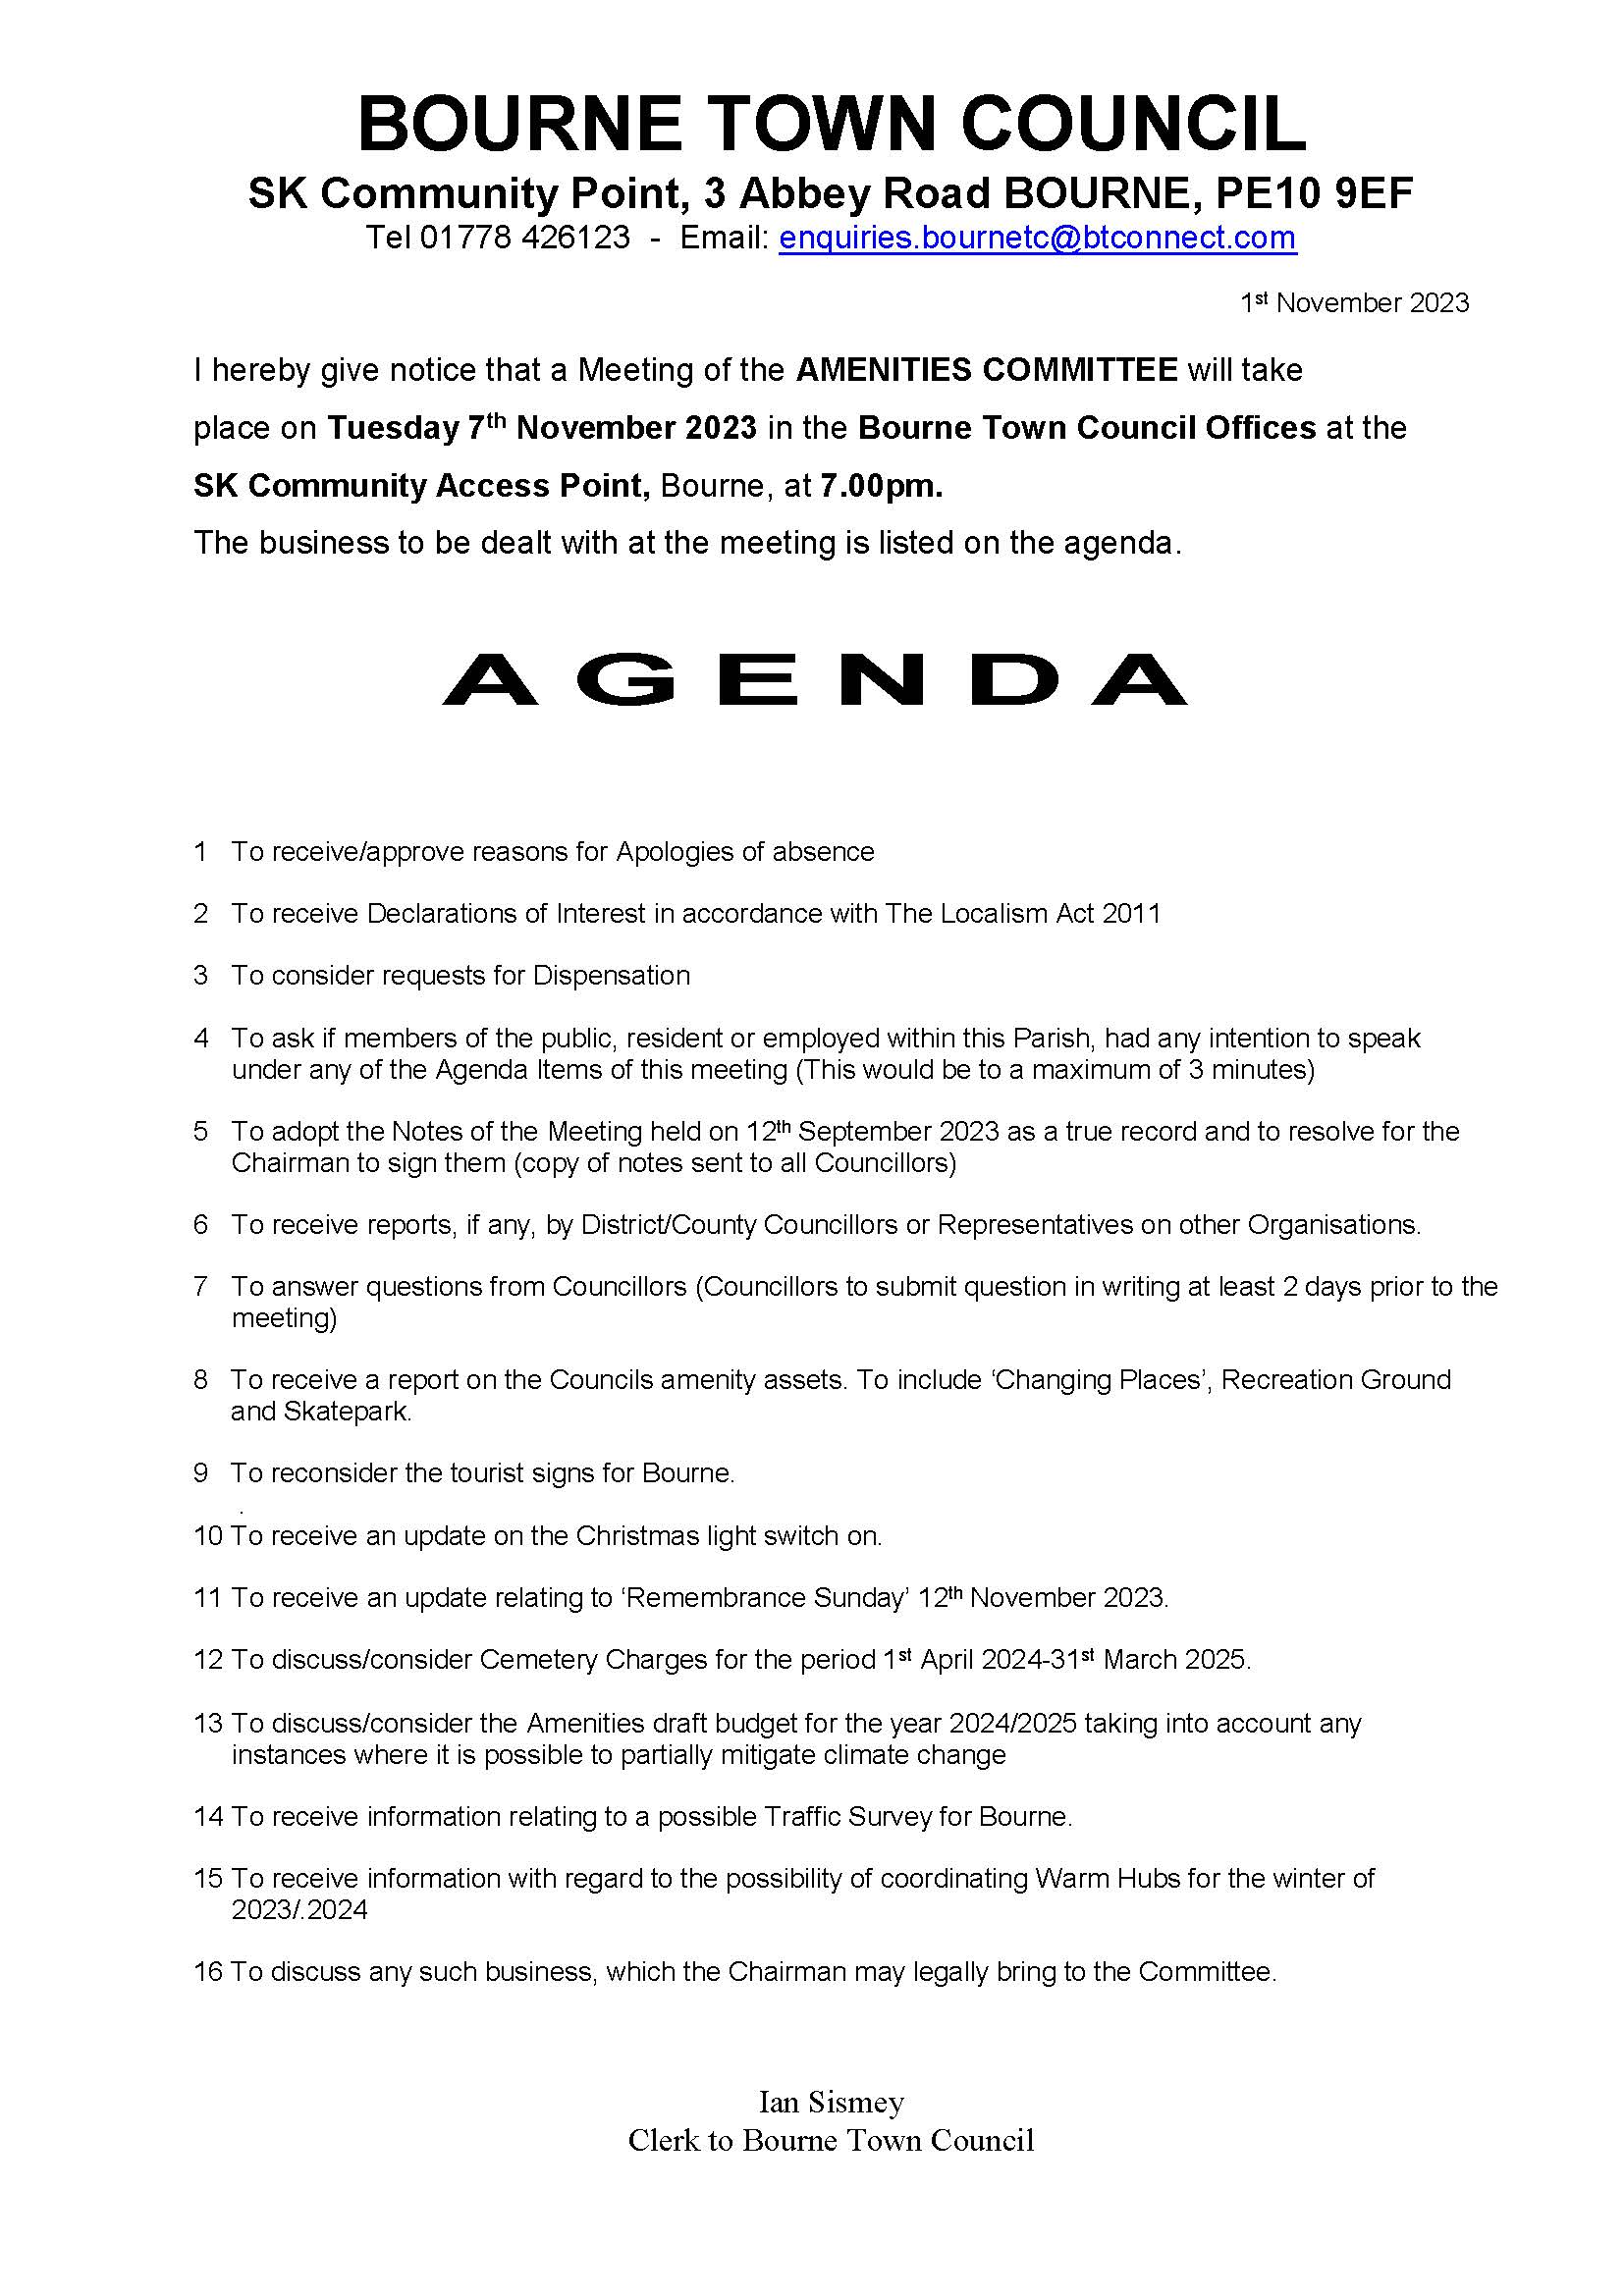 Notice and Agenda - Amenities Meeting 07/11/2023